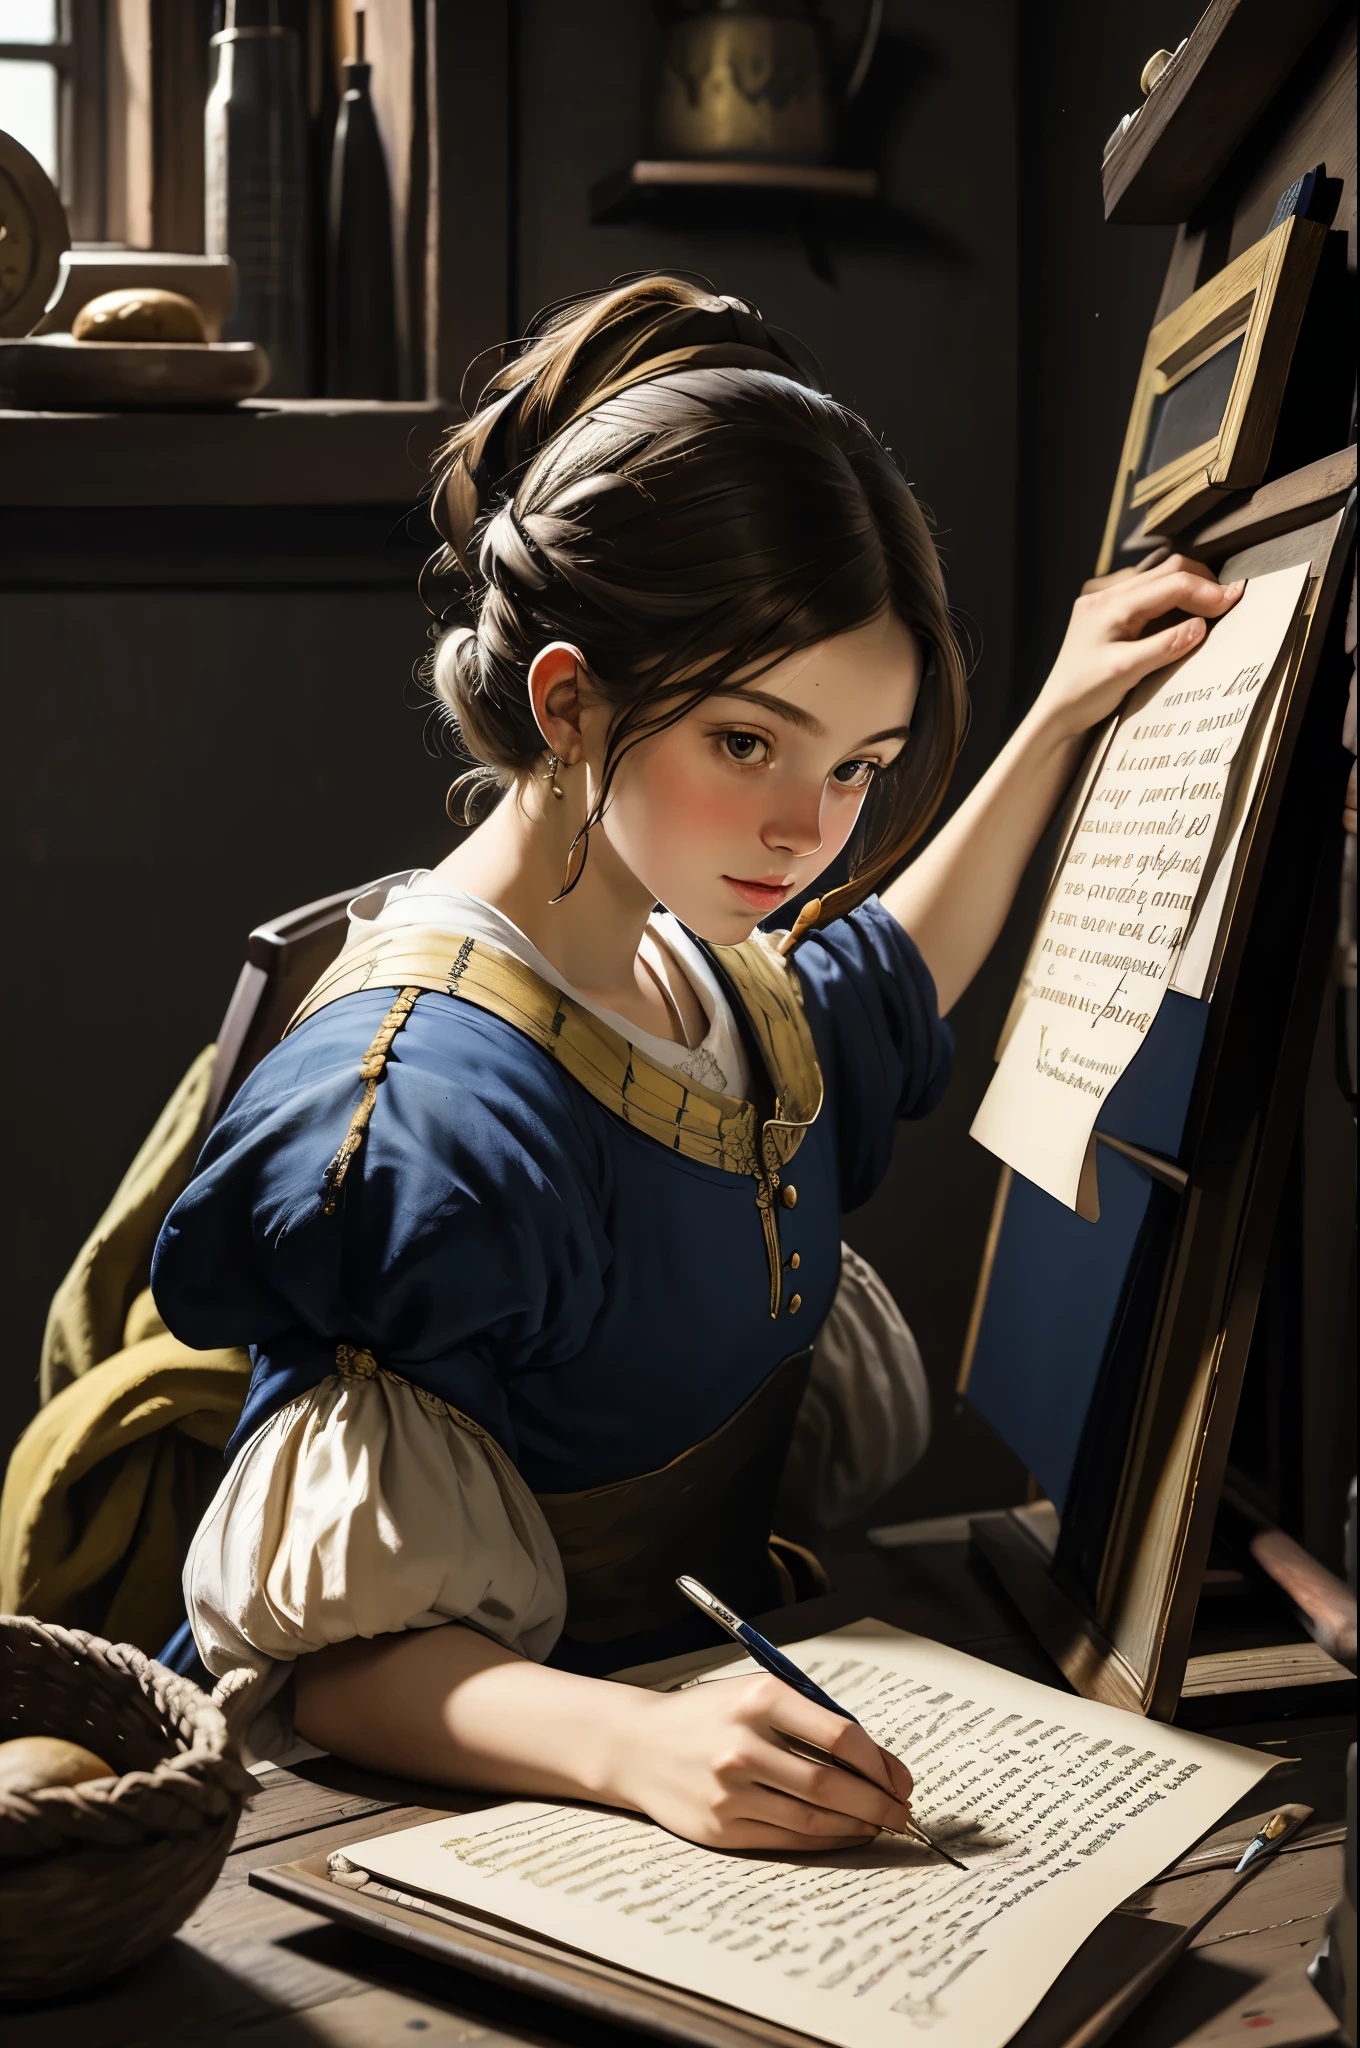 style Meisje met de parel, Gemälde Johannes Vermeer, Meisterwerk, einen Brief schreiben